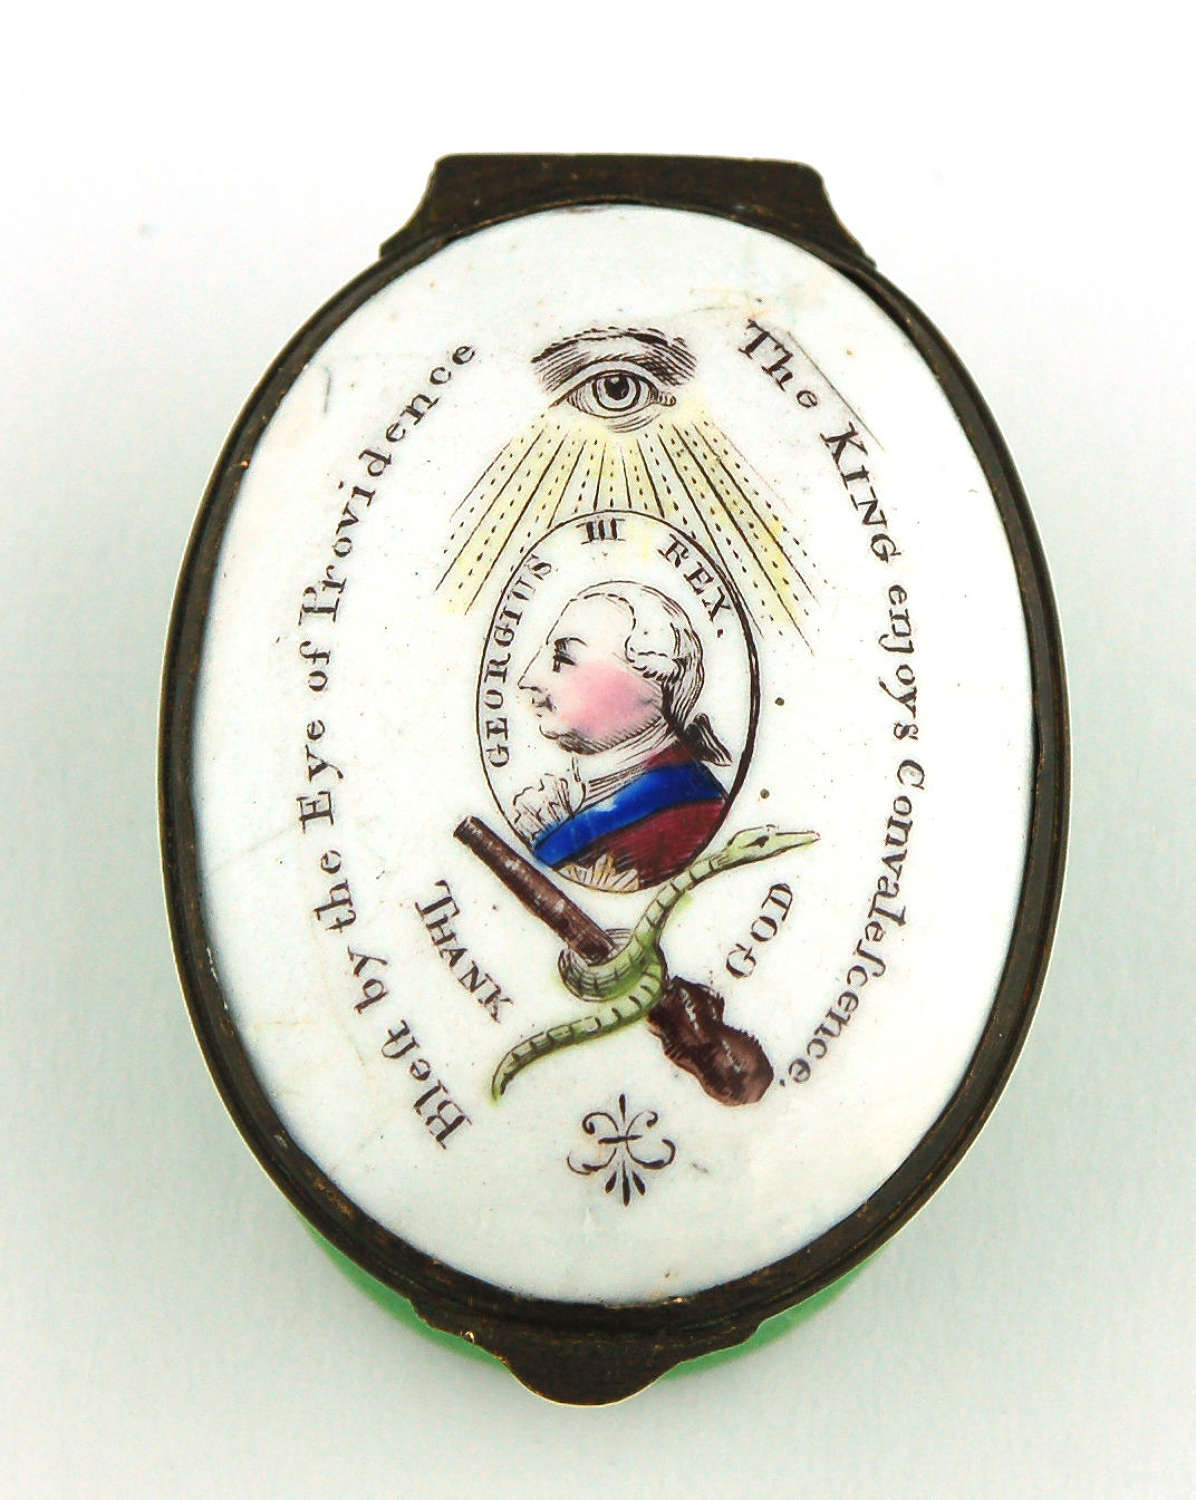 Enamel patch commemorating George III's convalescence